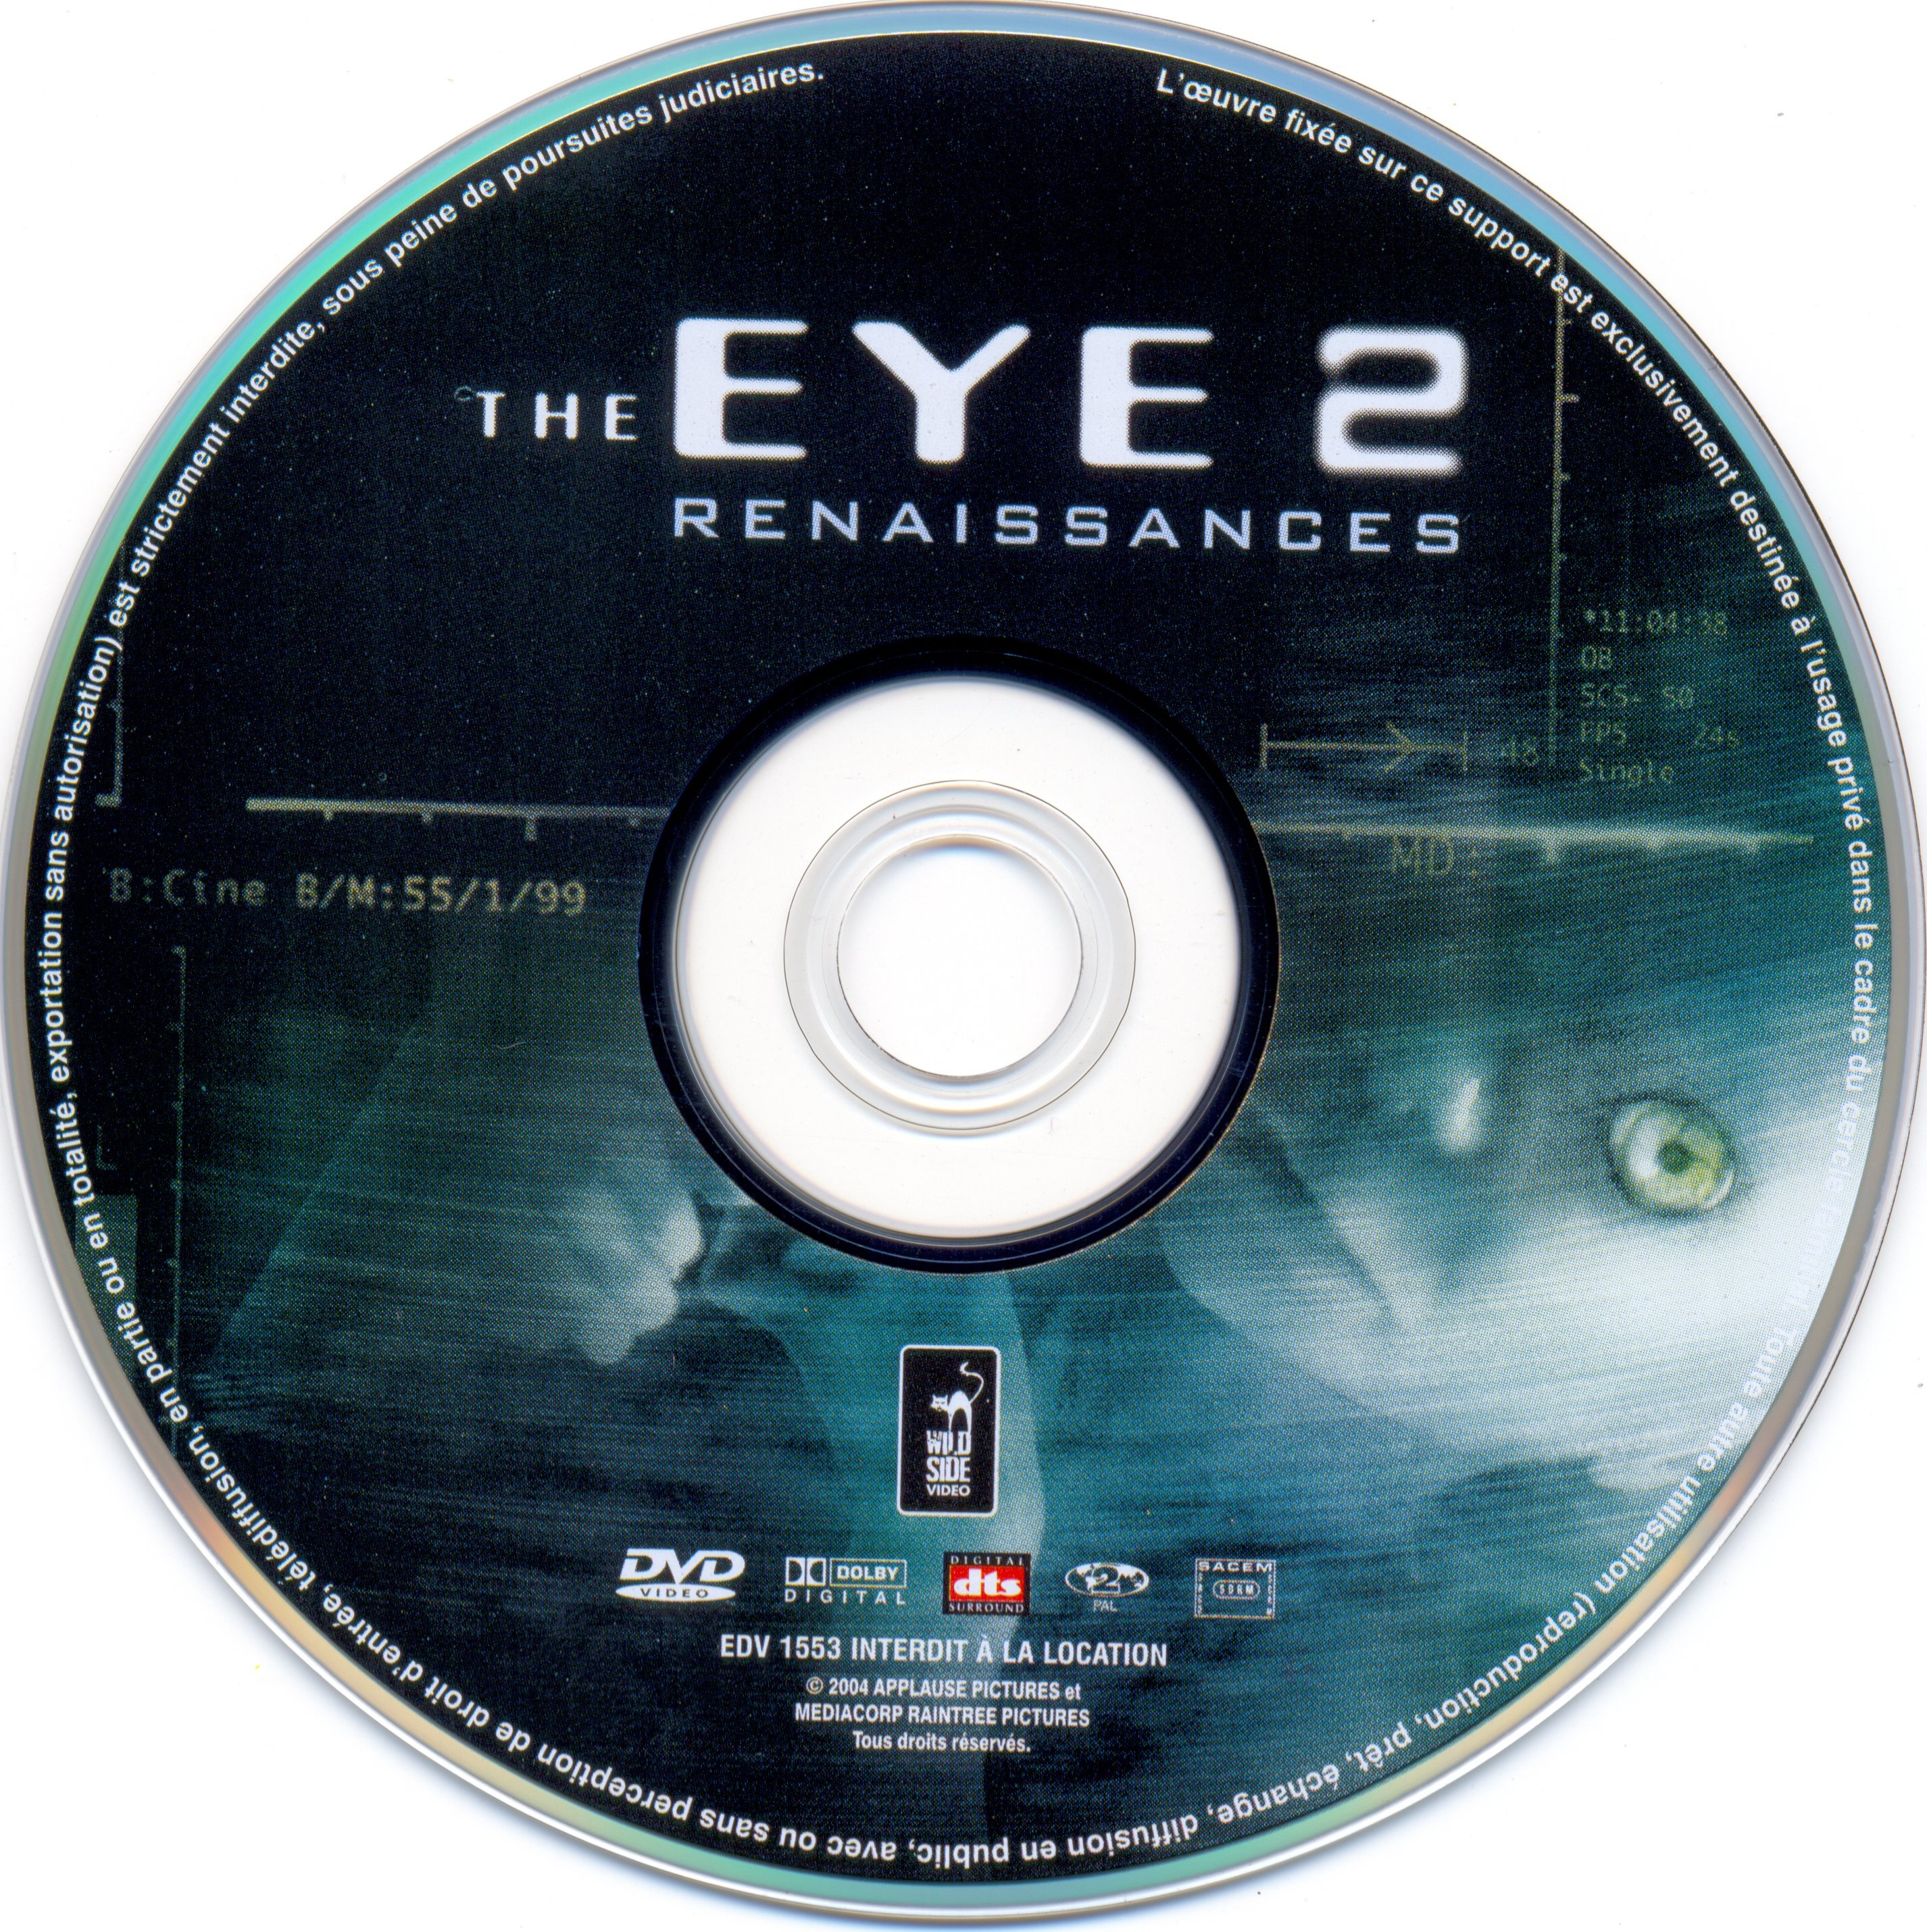 The eye 2